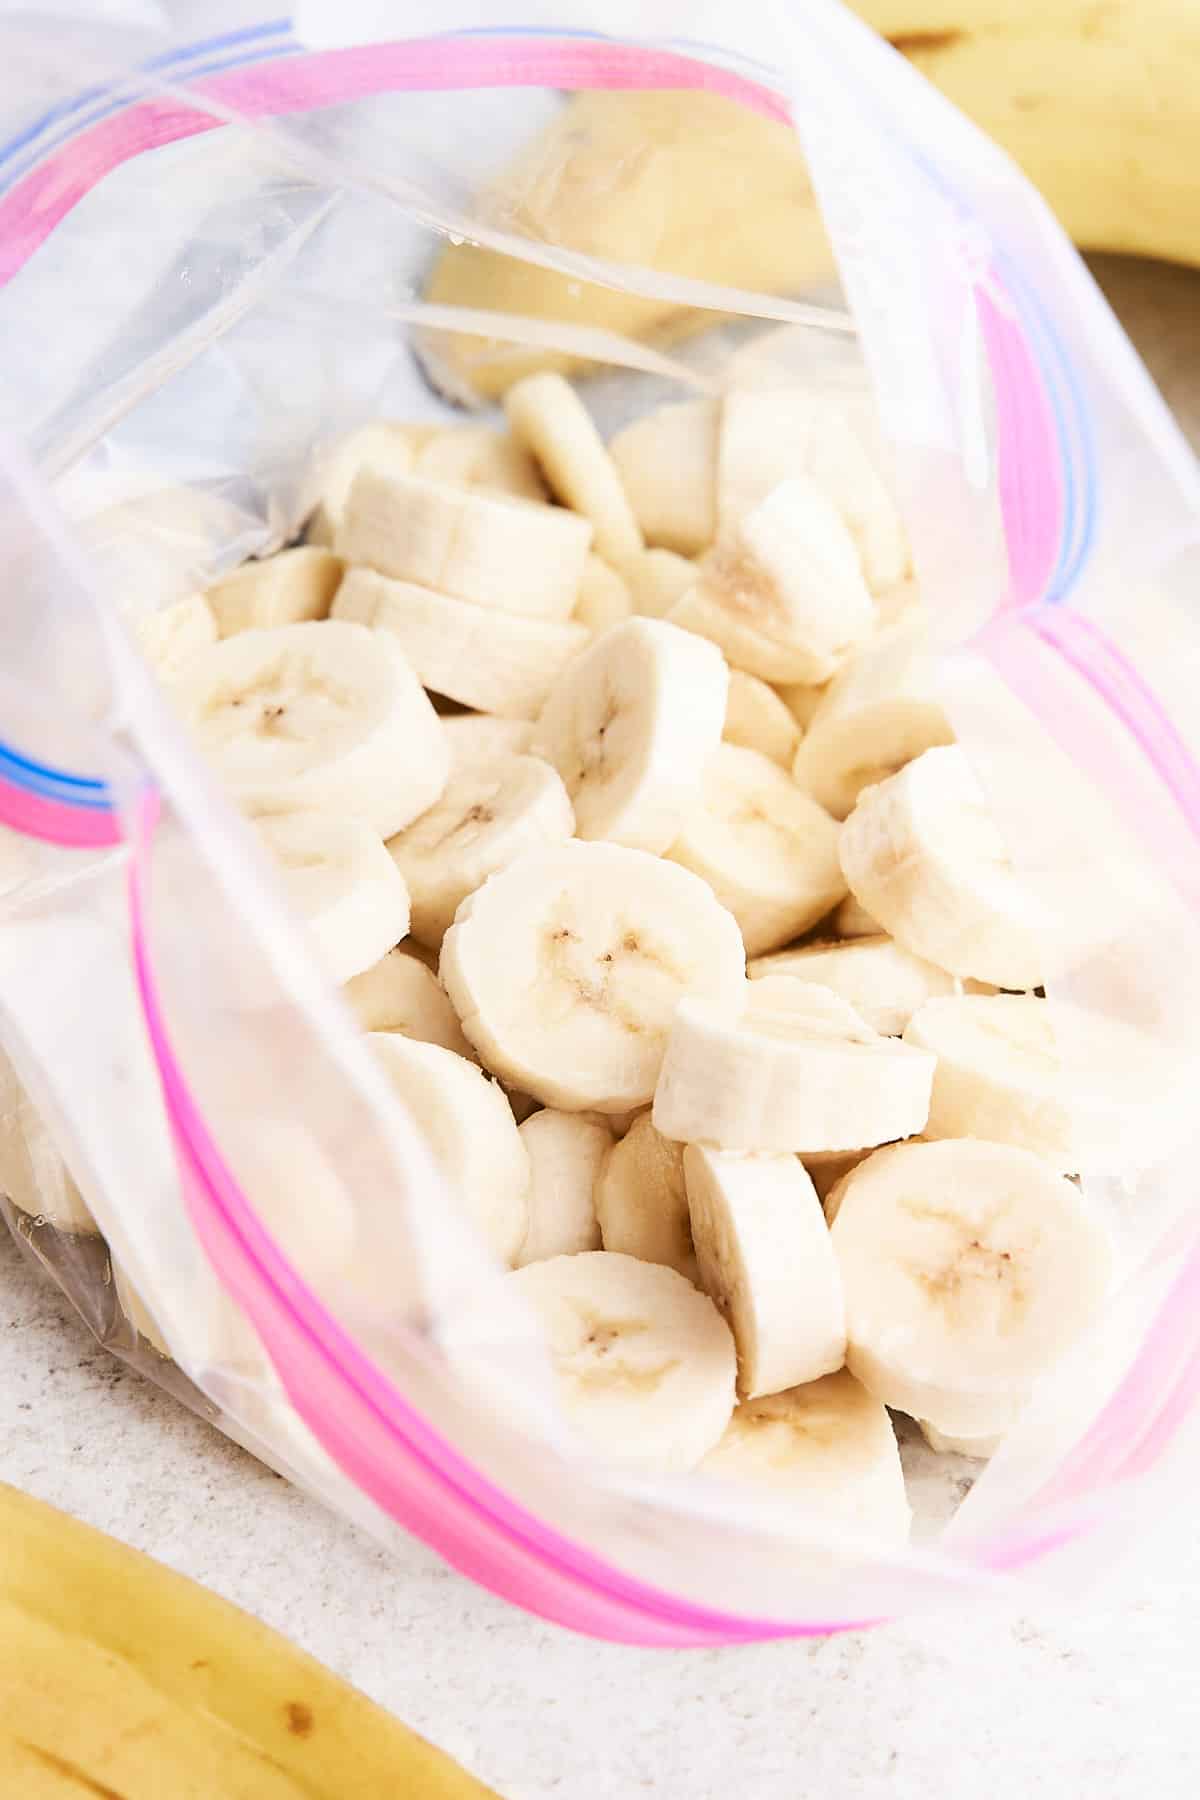 Banana slices in a freezer bag.